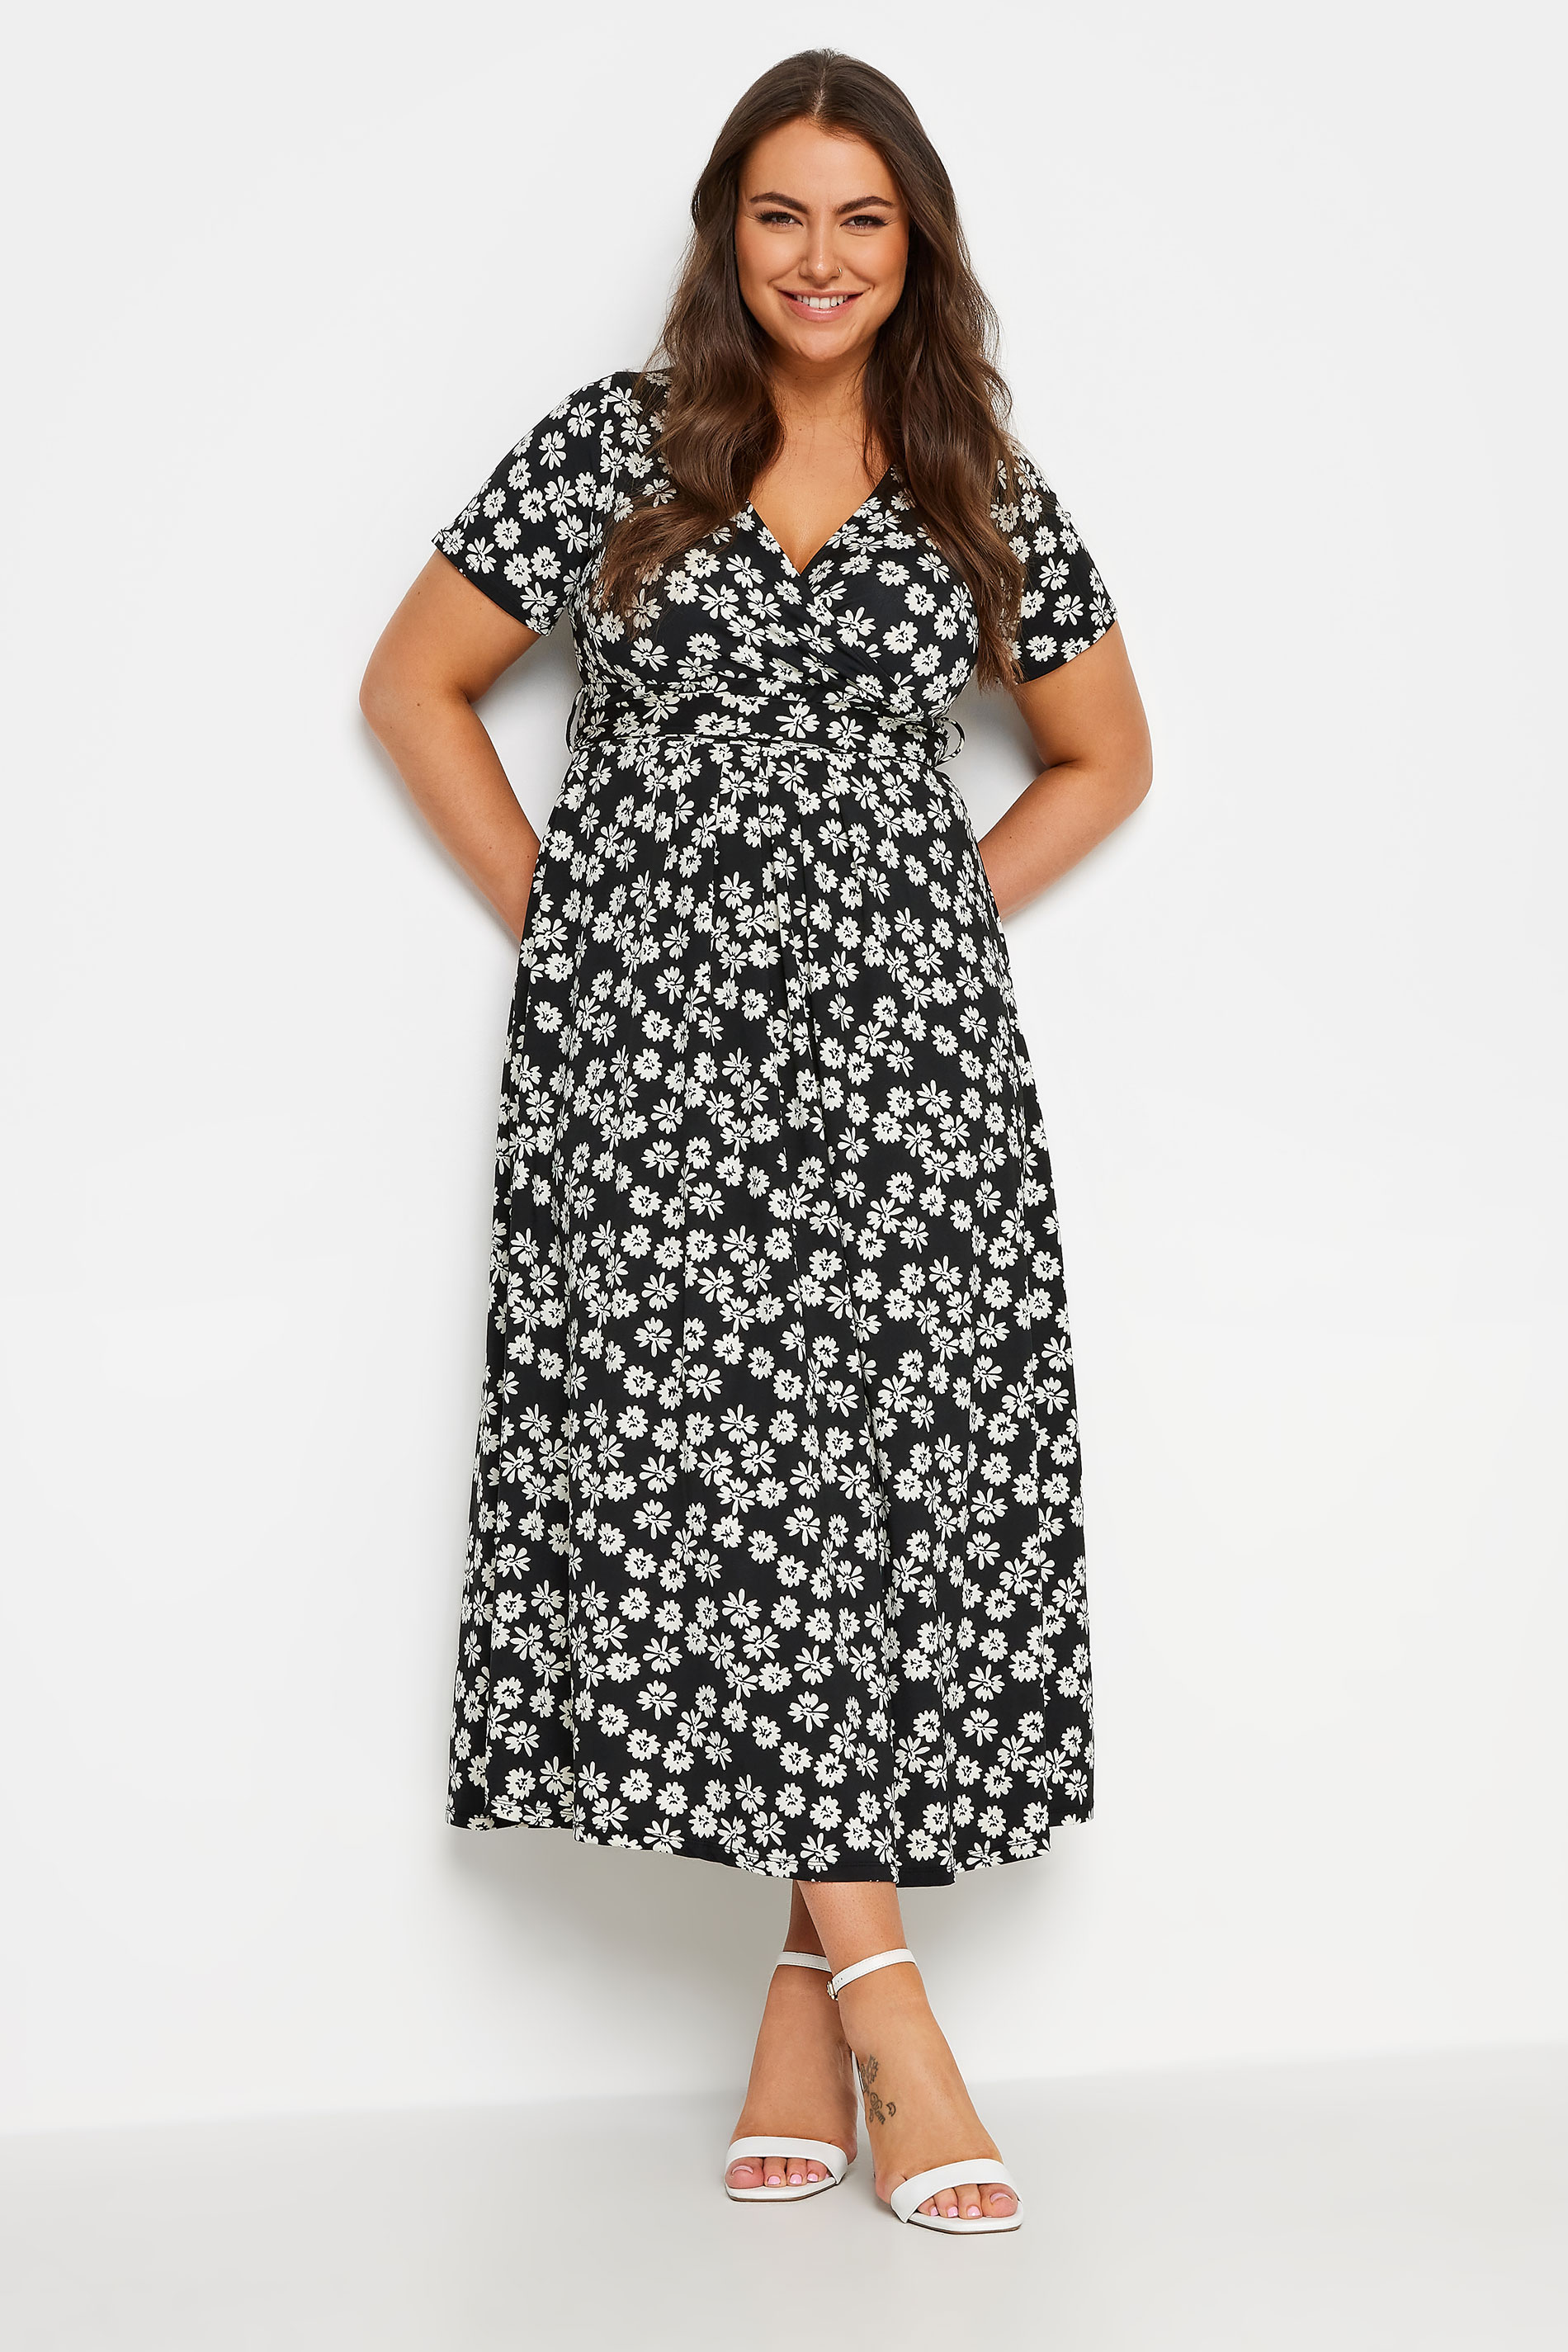 YOURS Plus Size Black Floral Print Tie Waist Maxi Dress | Yours Clothing 1